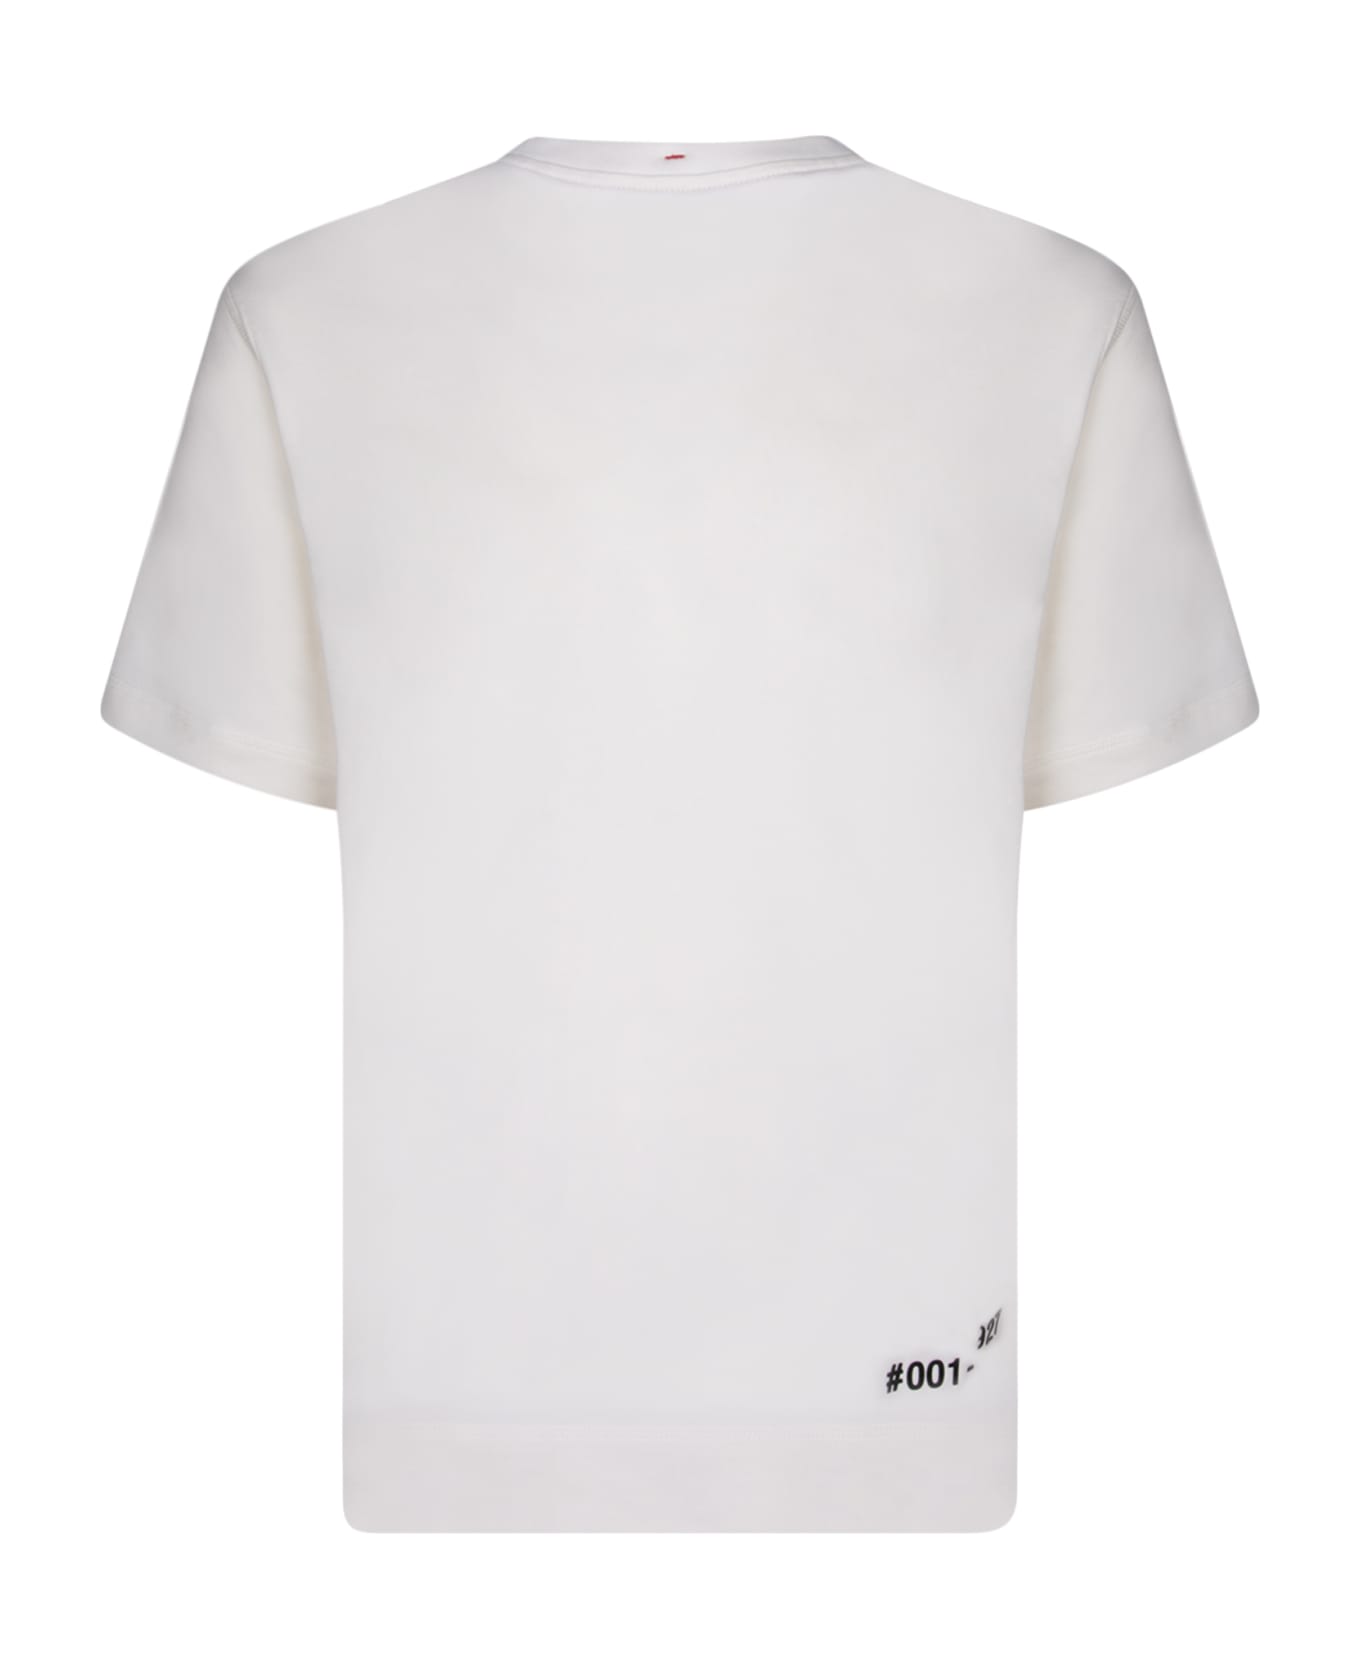 Moncler Grenoble Logo Print T-shirt - 041 Tシャツ